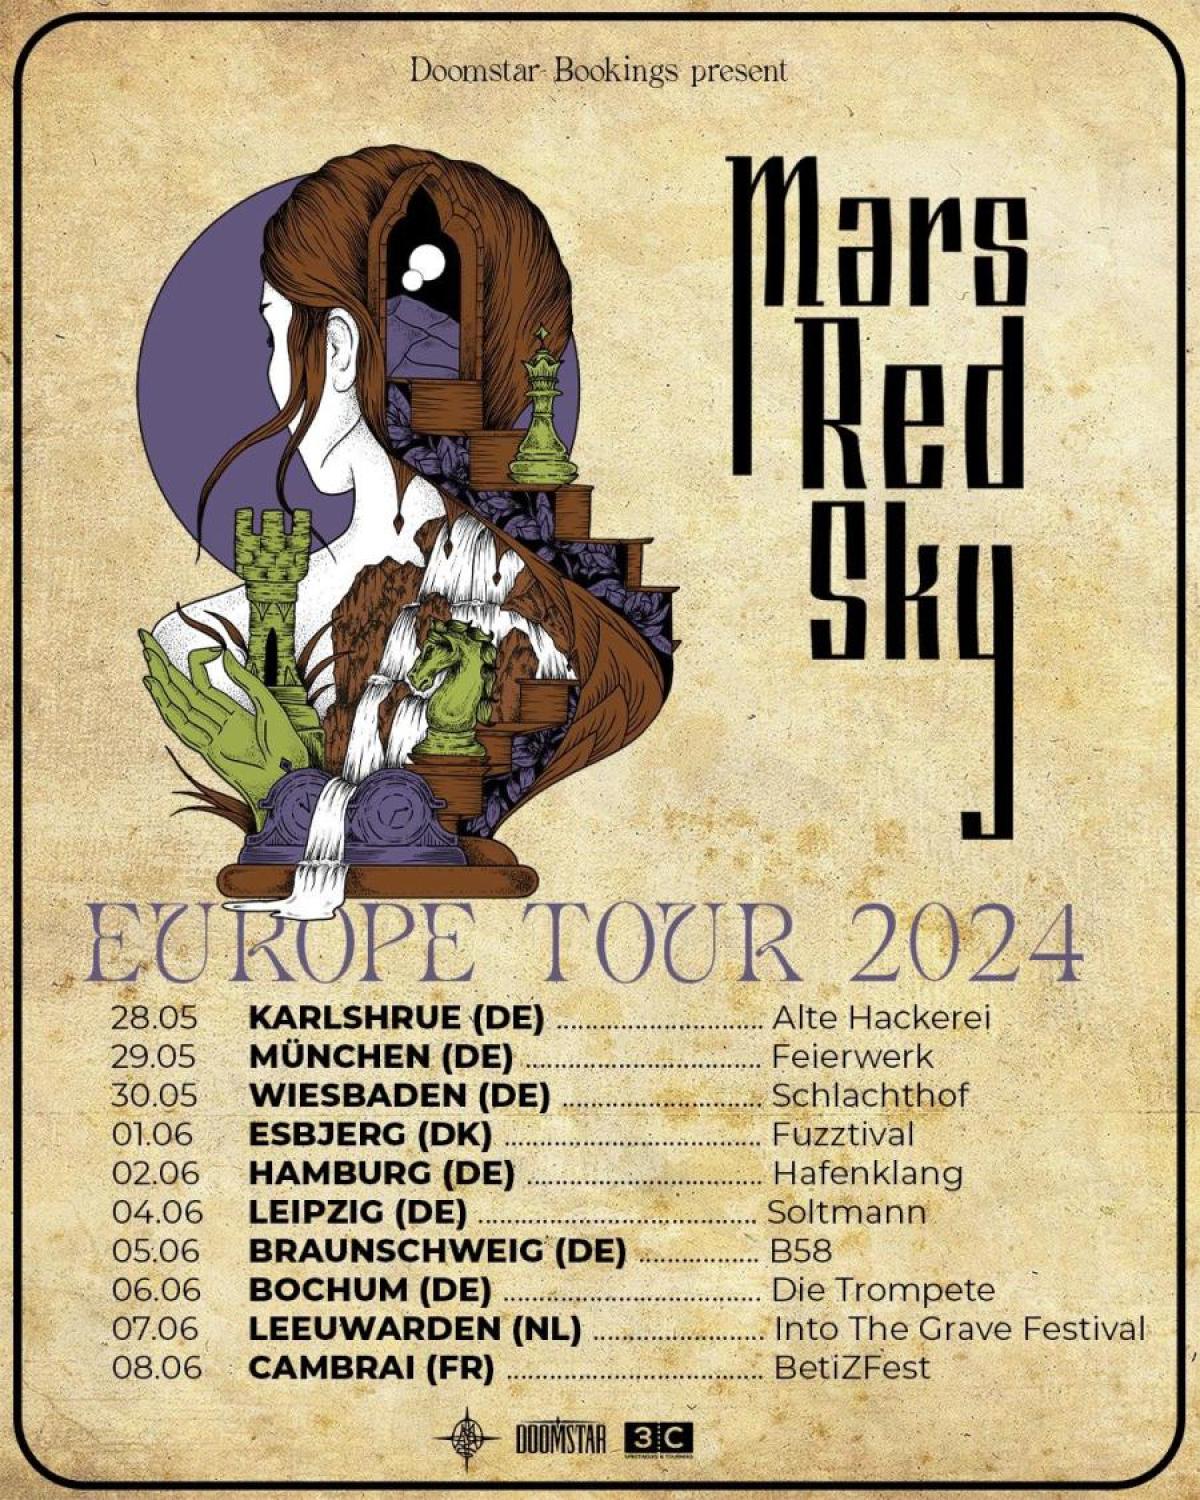 Billets Mars Red Sky - European Tour 2024 (Feierwerk - Munich)